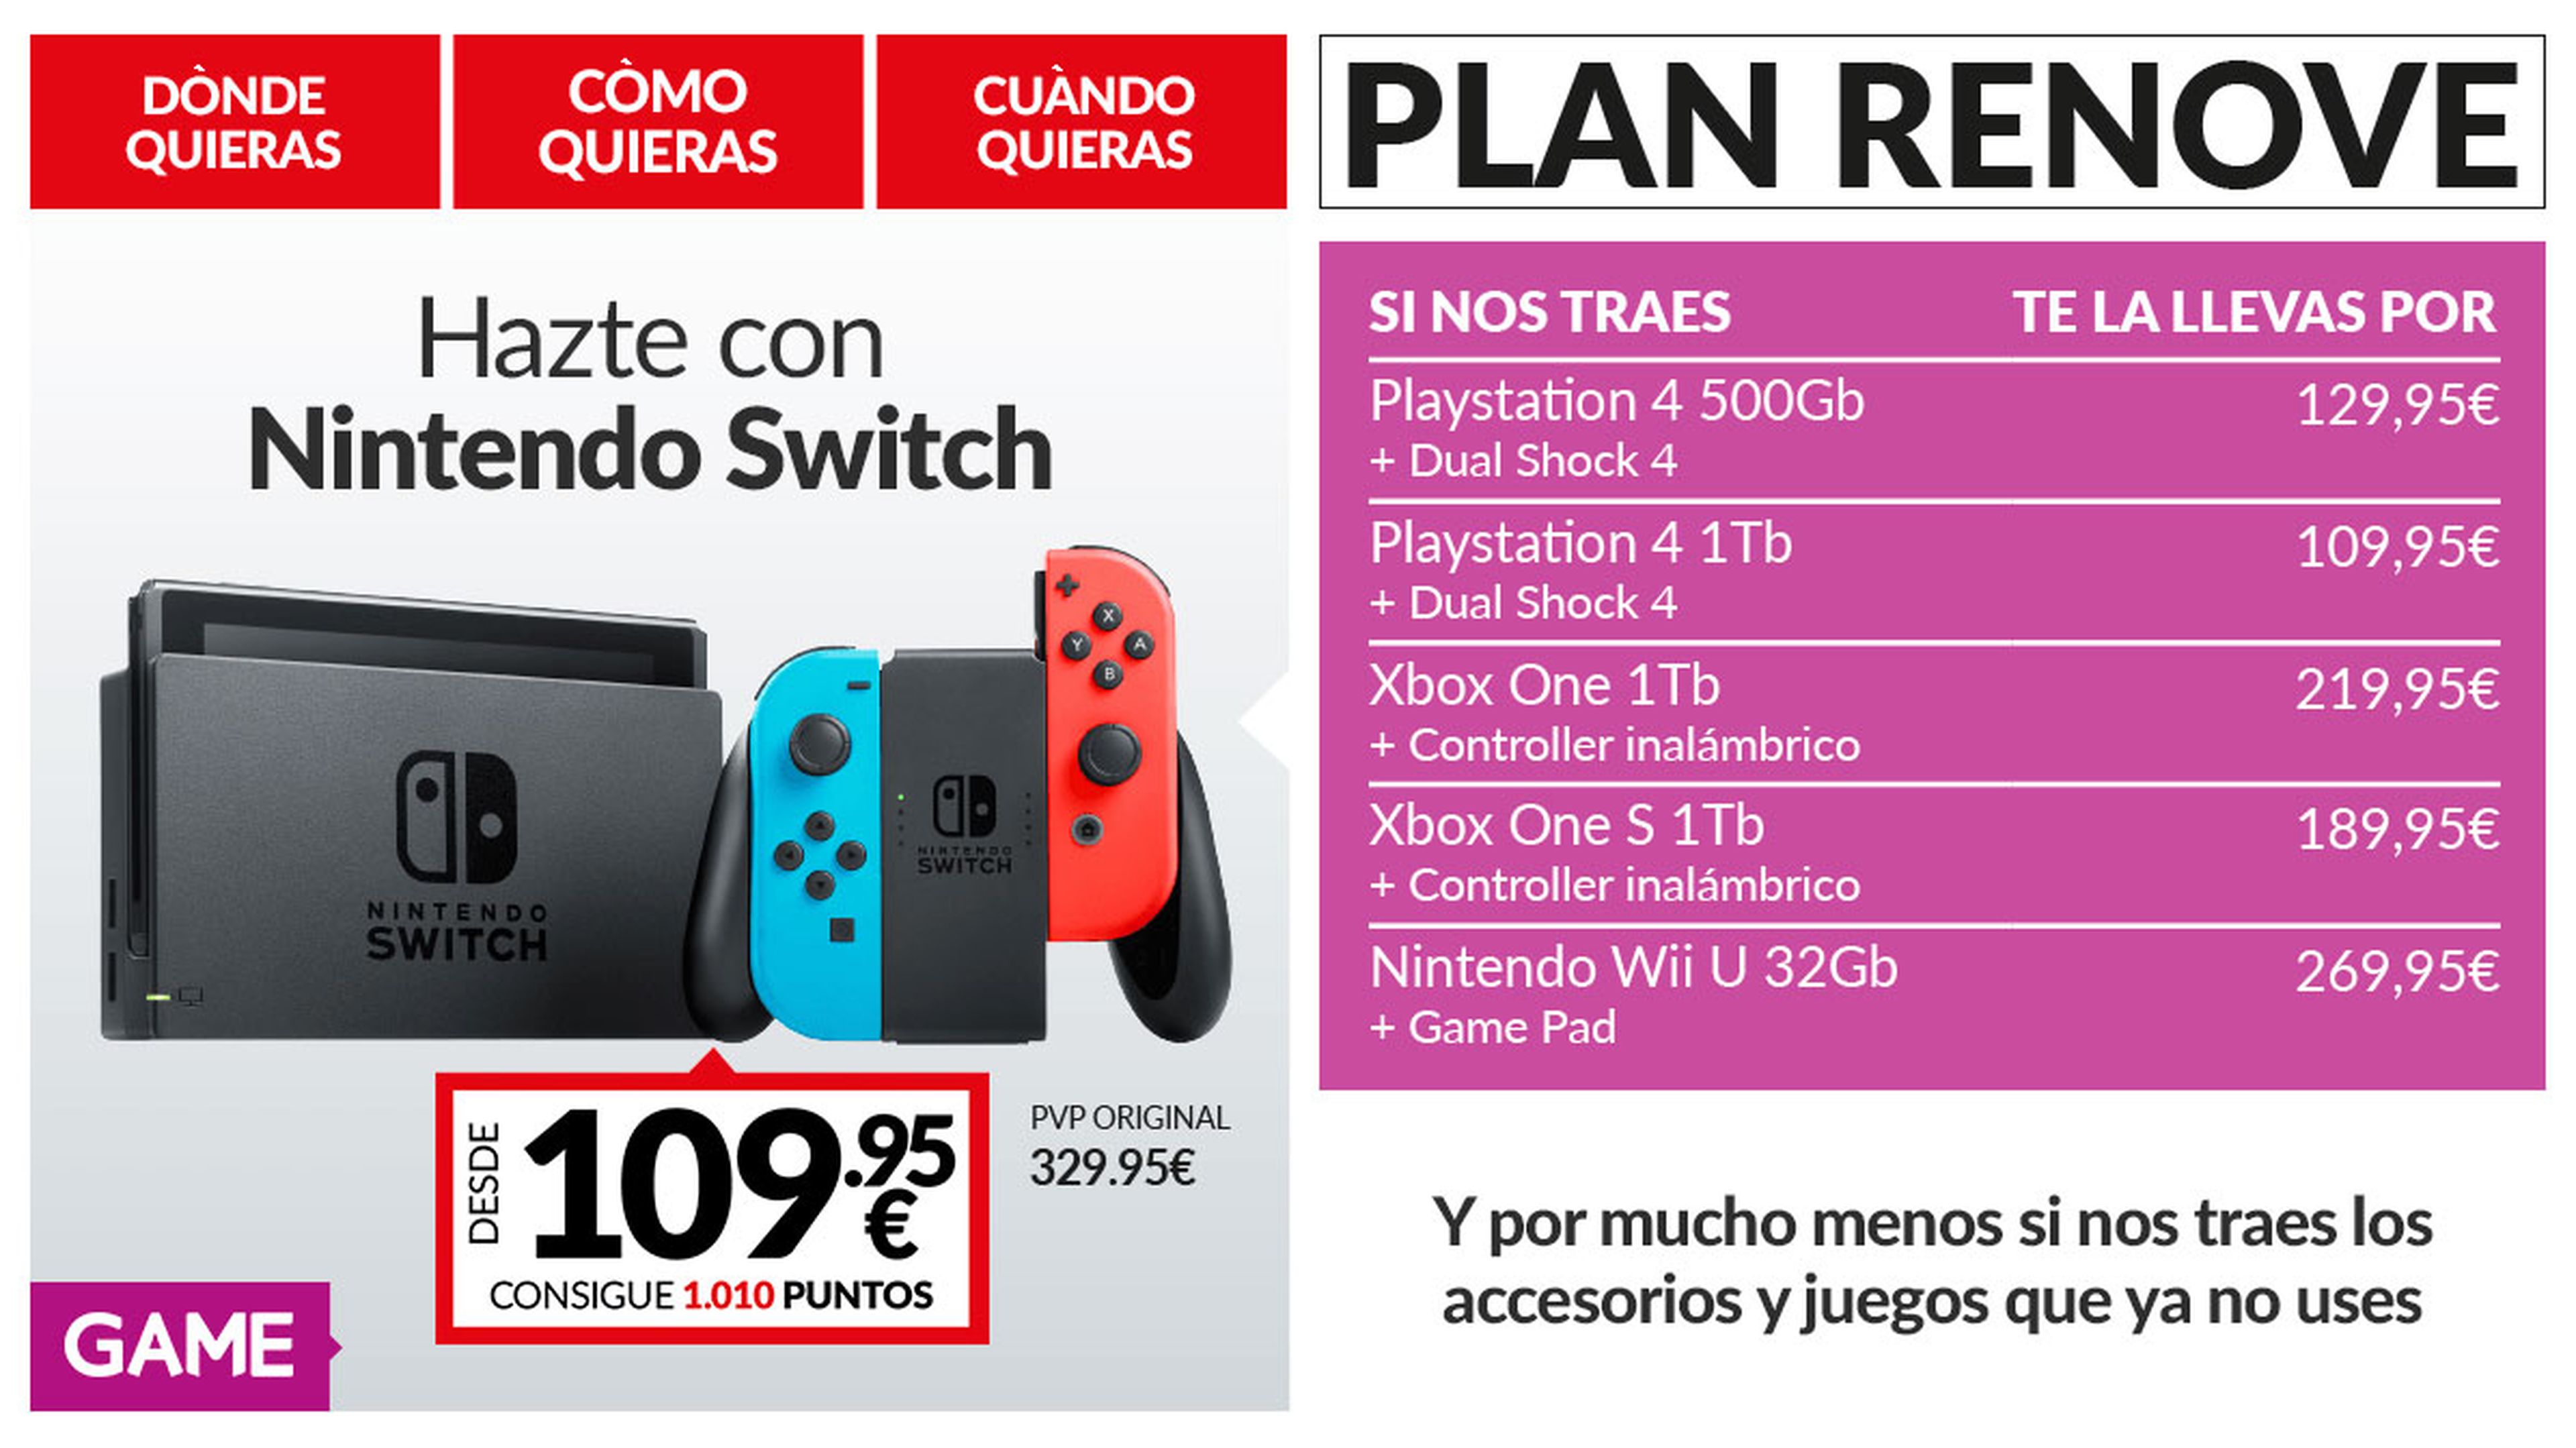 Plan renove Nintendo Switch en GAME